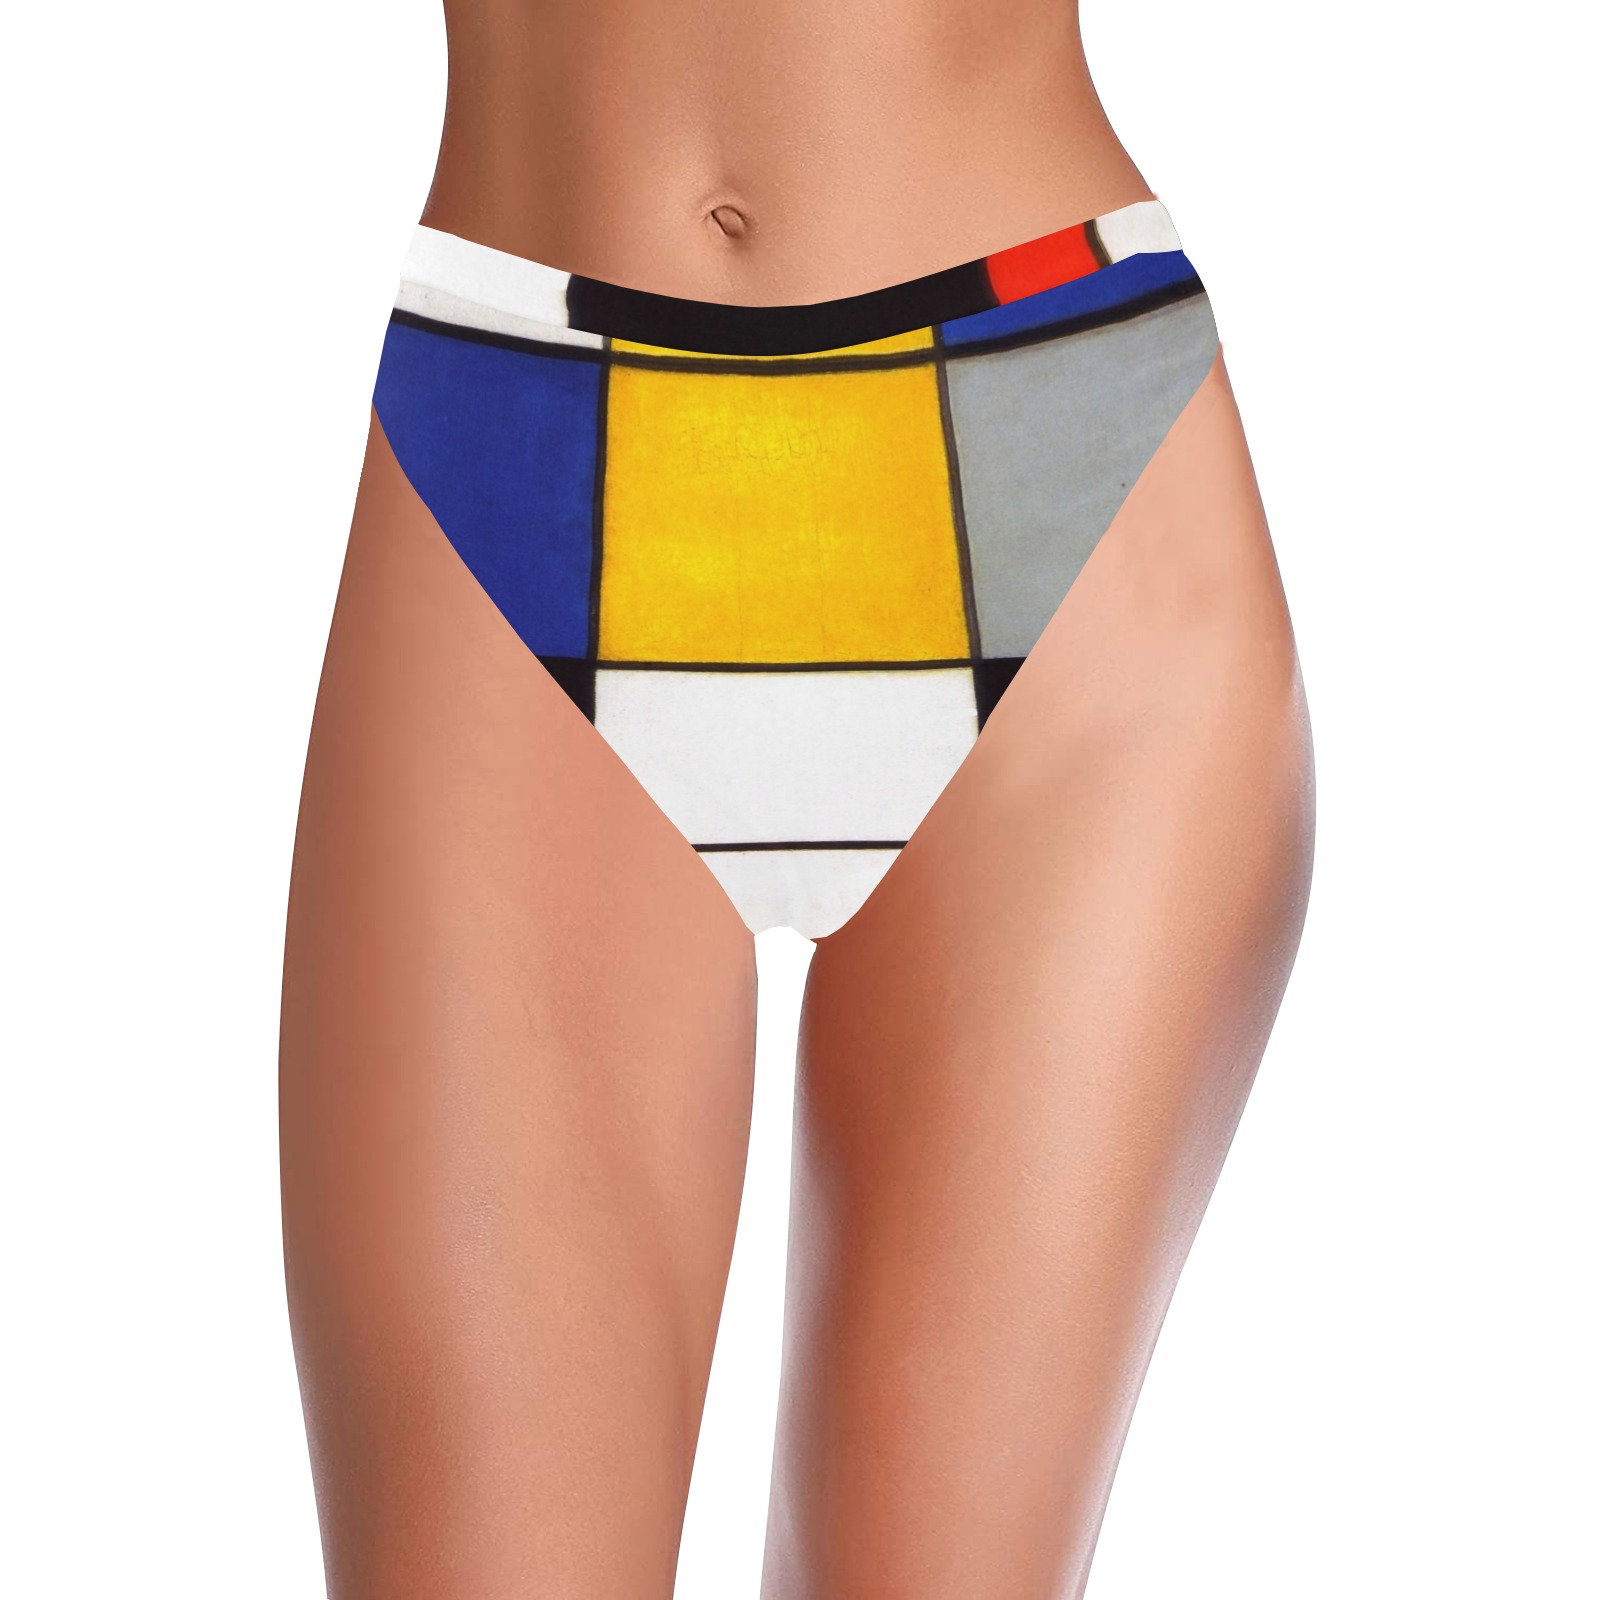 Composition A by Piet Mondrian High-Waisted High-Cut Bikini Bottom (Model S07)